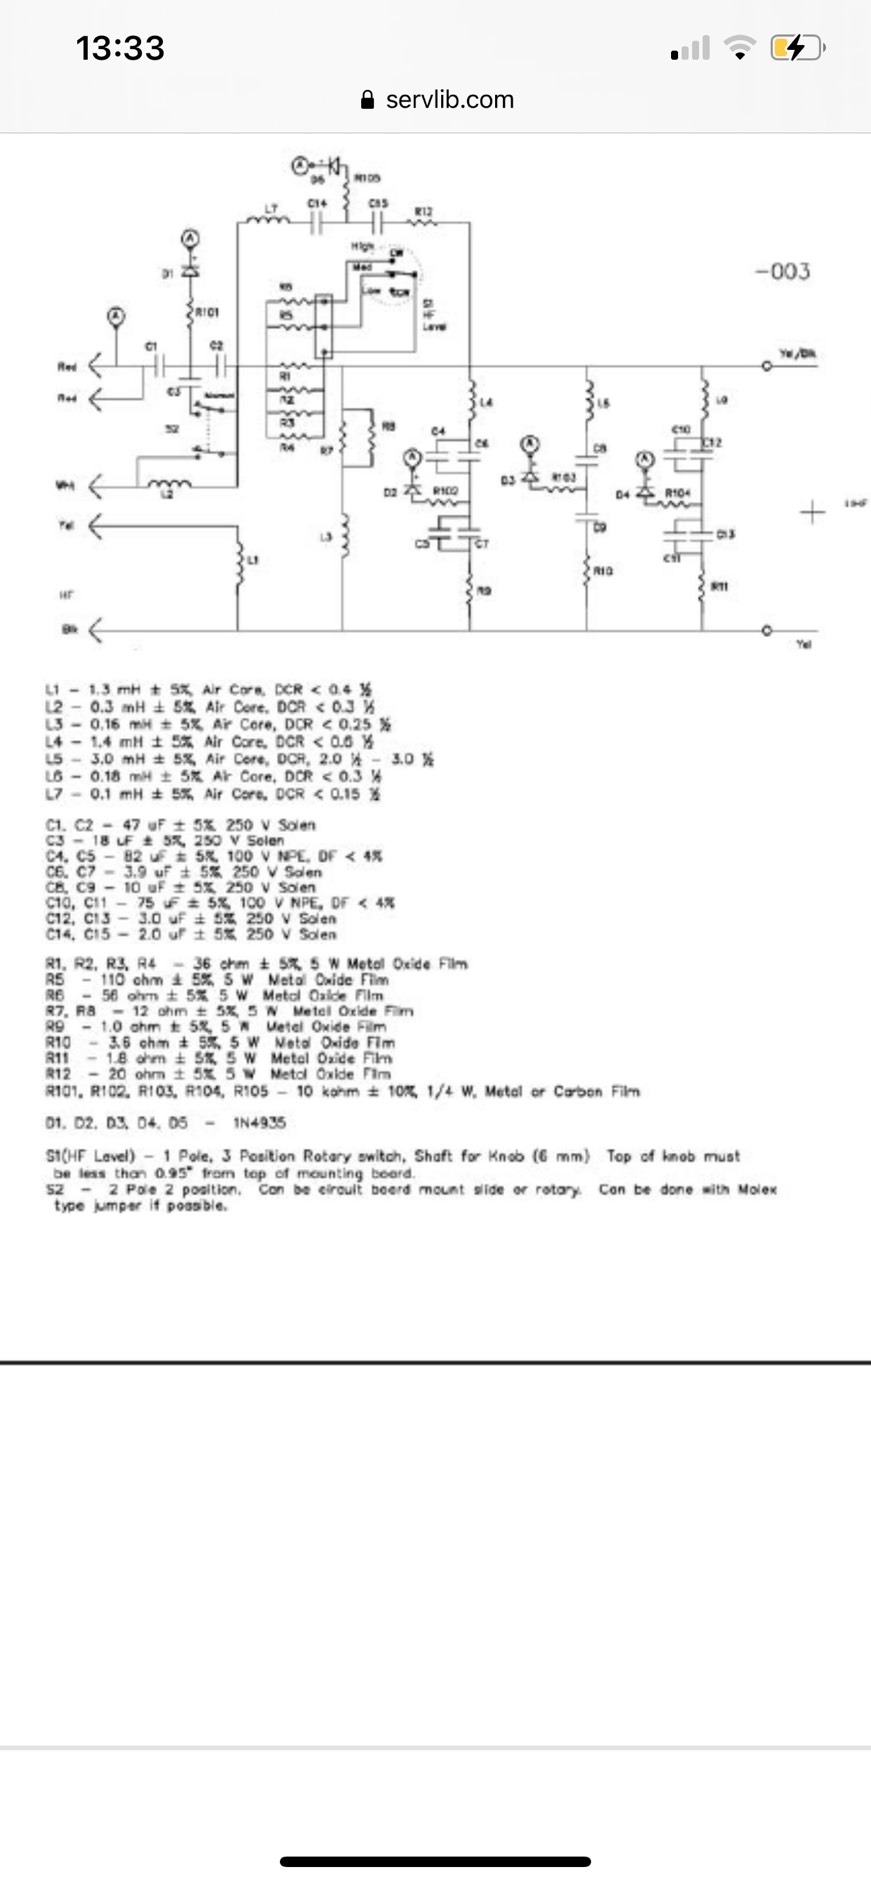 JBL DD6700 schematic diagram explananation | diyAudio